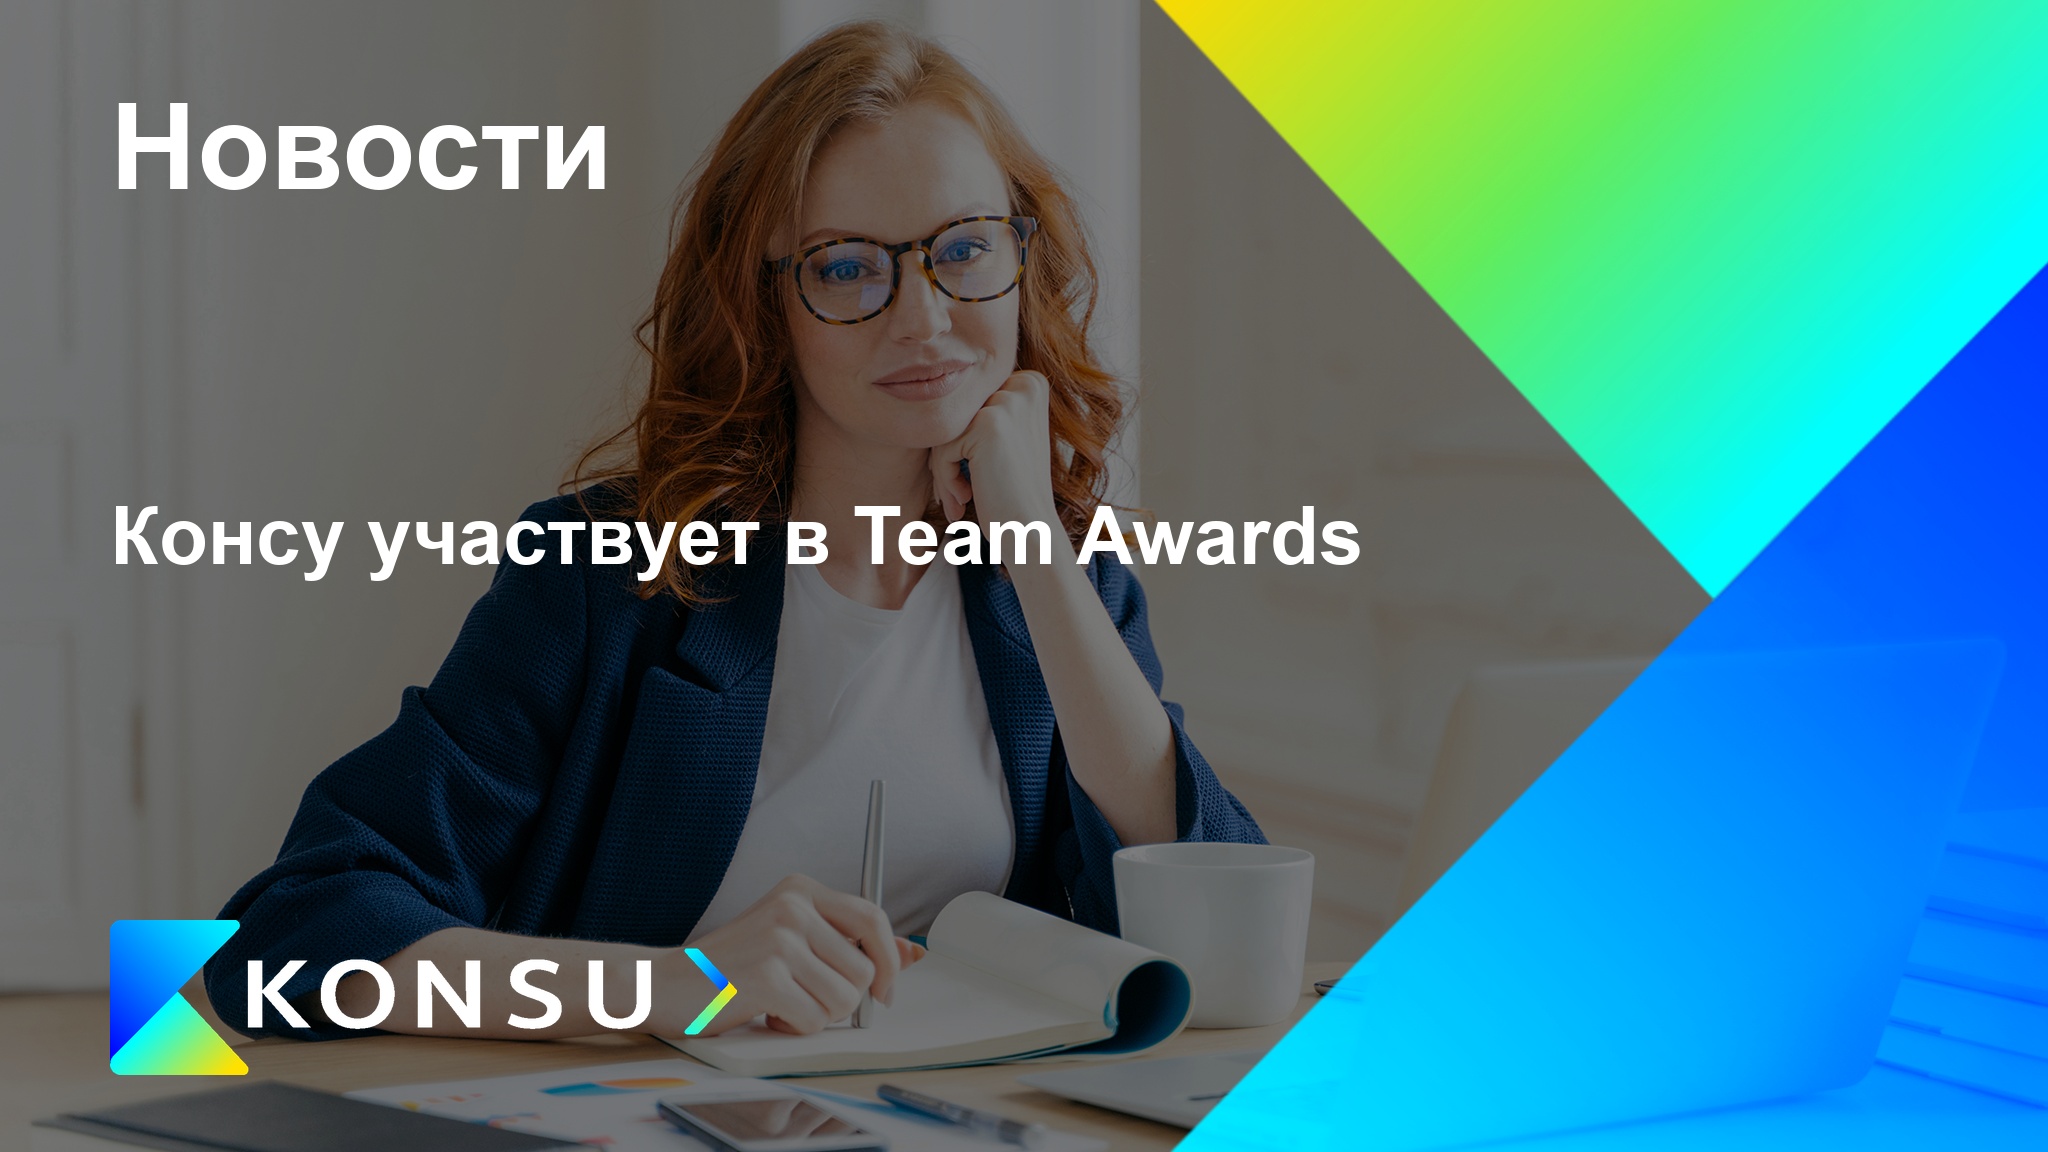 Konsu uchastvuet team awards ru konsu outsourcing consulting ru 